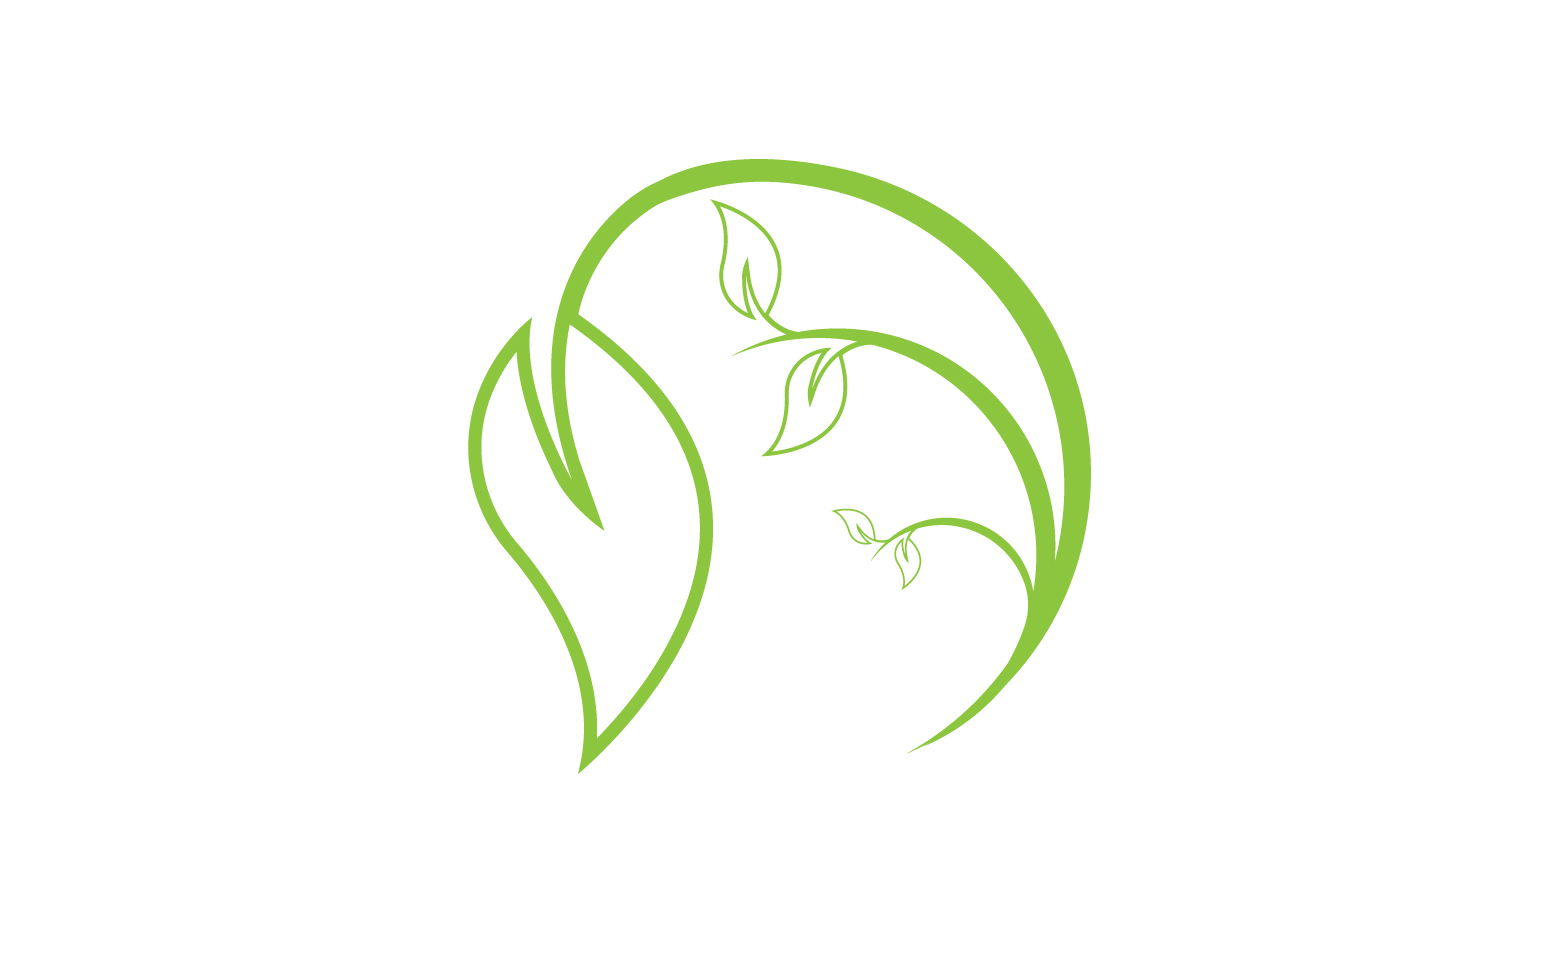 Leaf green ecology tree element icon version v5